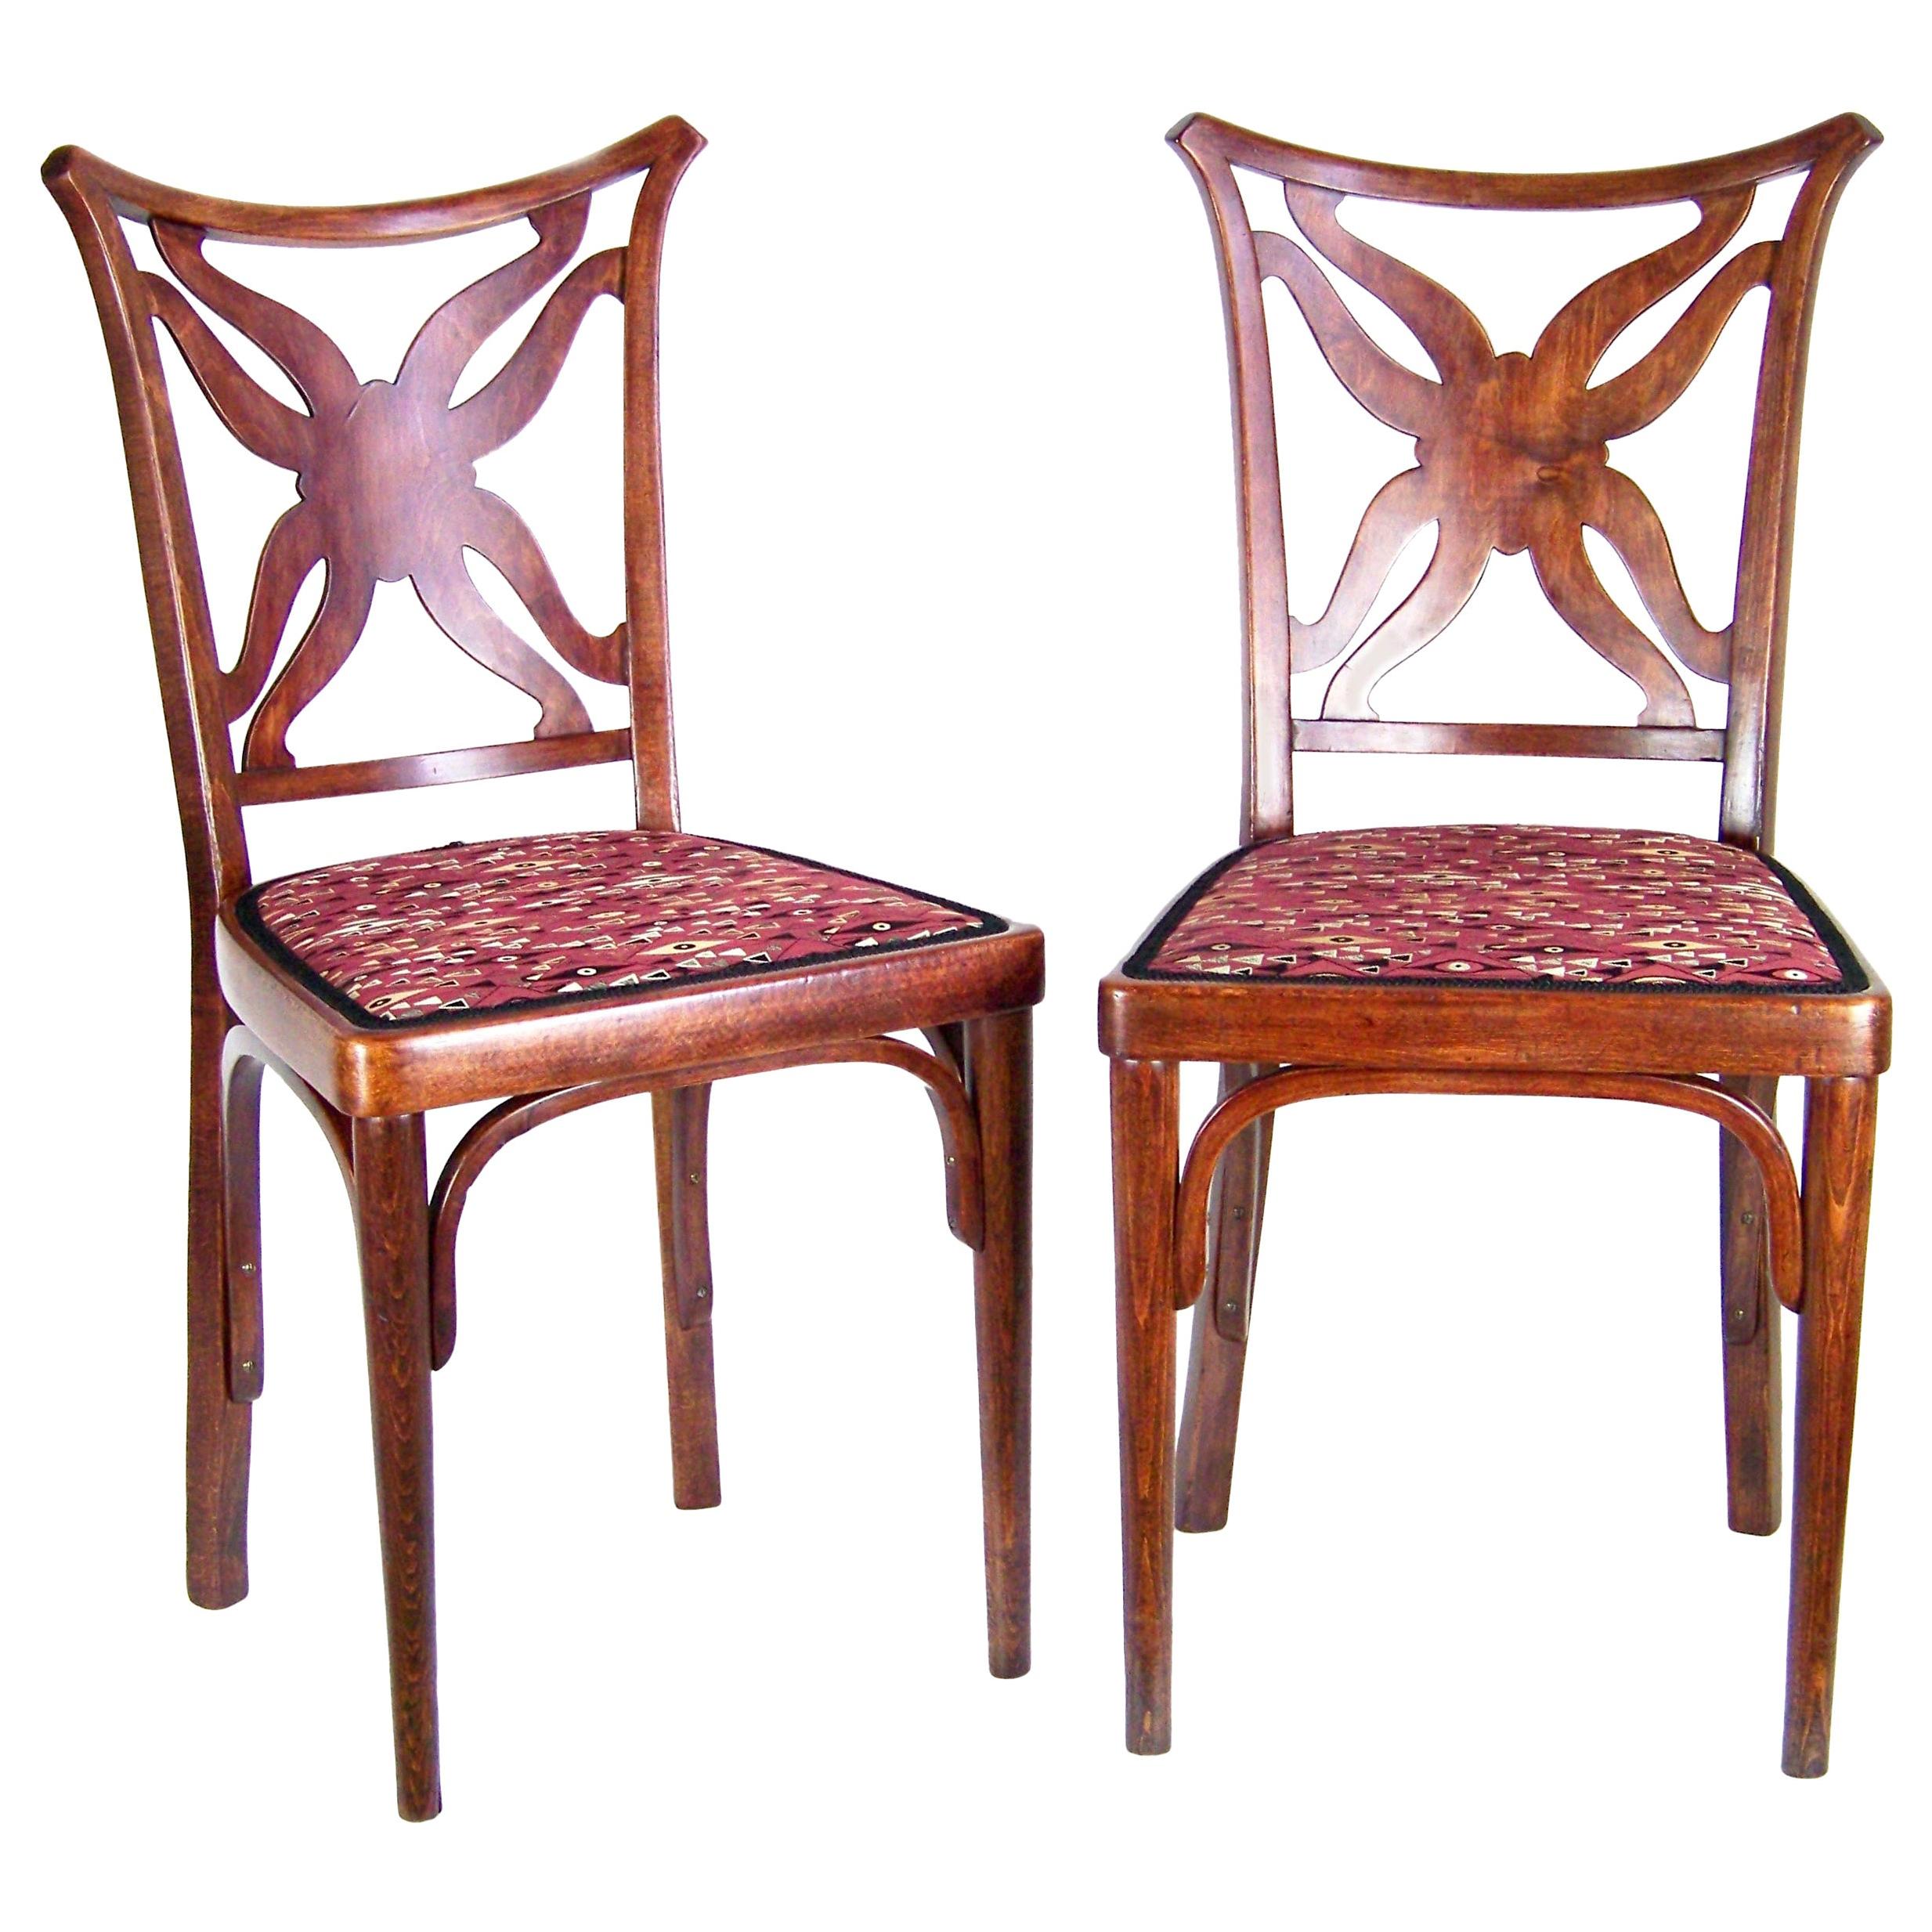 Two Unique Chairs J&J Kohn from 1915, Hotel Ambassador in Prague, Josef Hoffmann